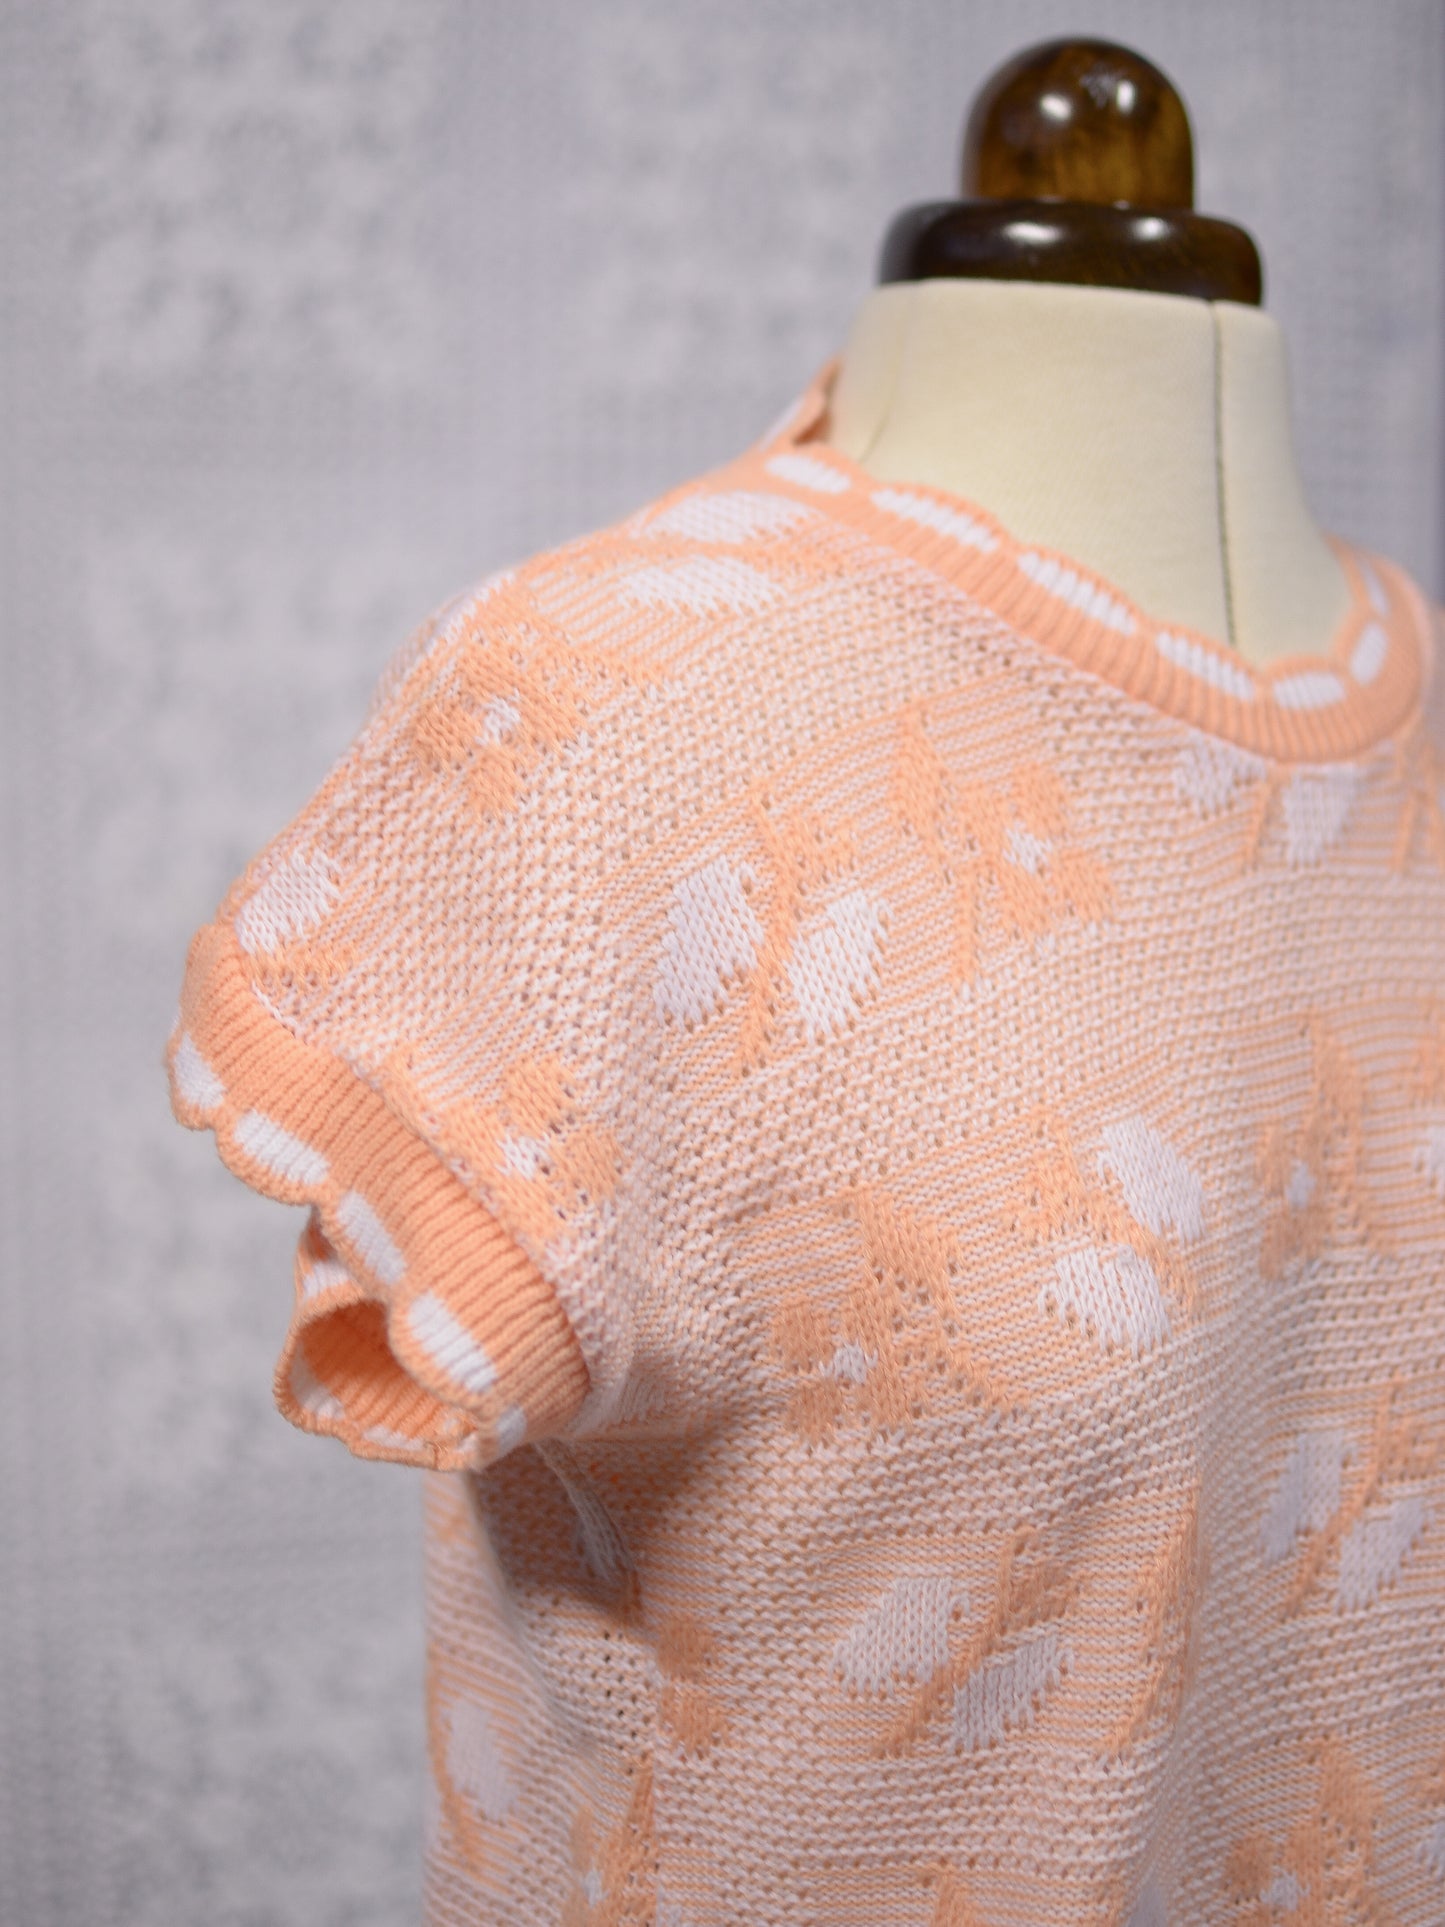 1980s peachy orange and white sleeveless jumper sweater vest